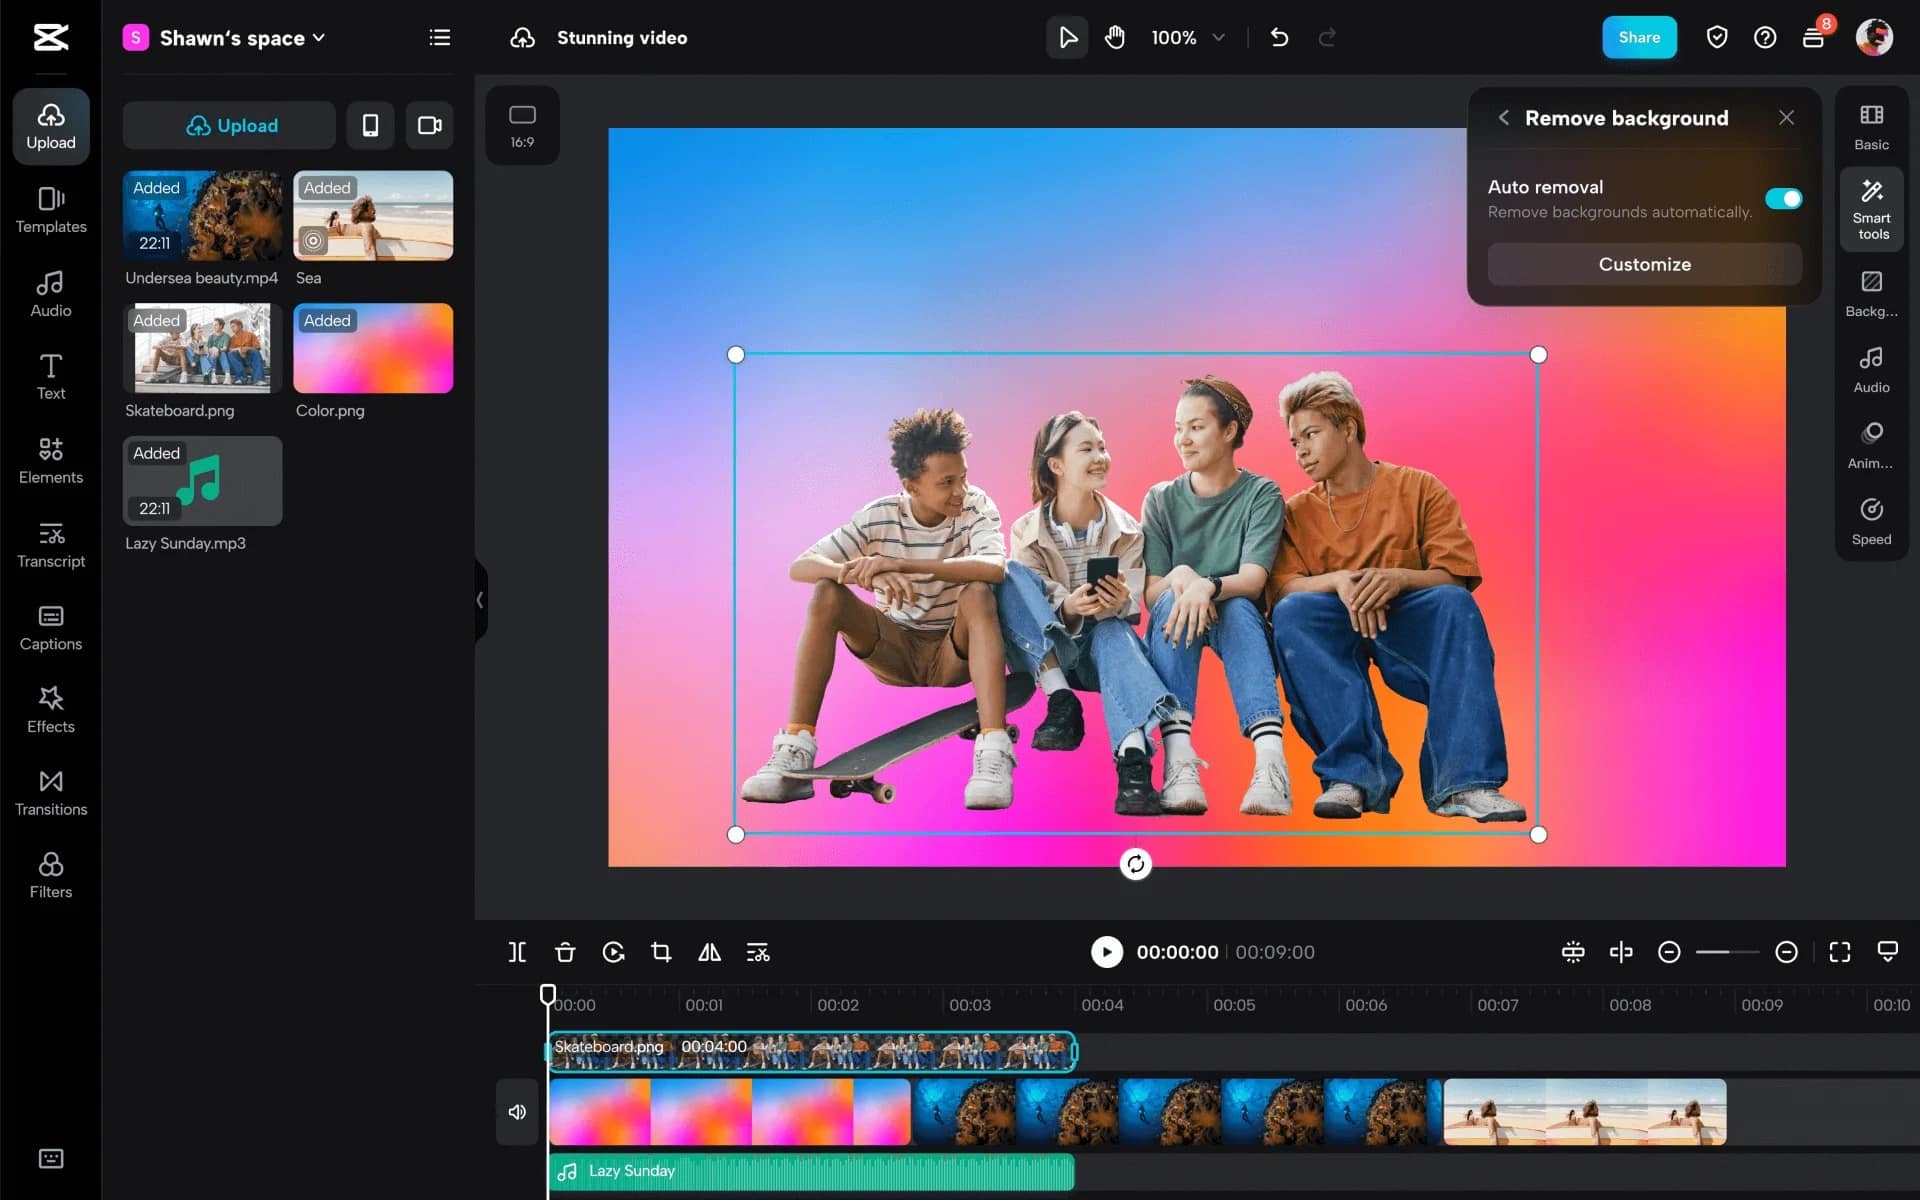 Adobe's Photoshop Creative Suite 2 | Shutterbug